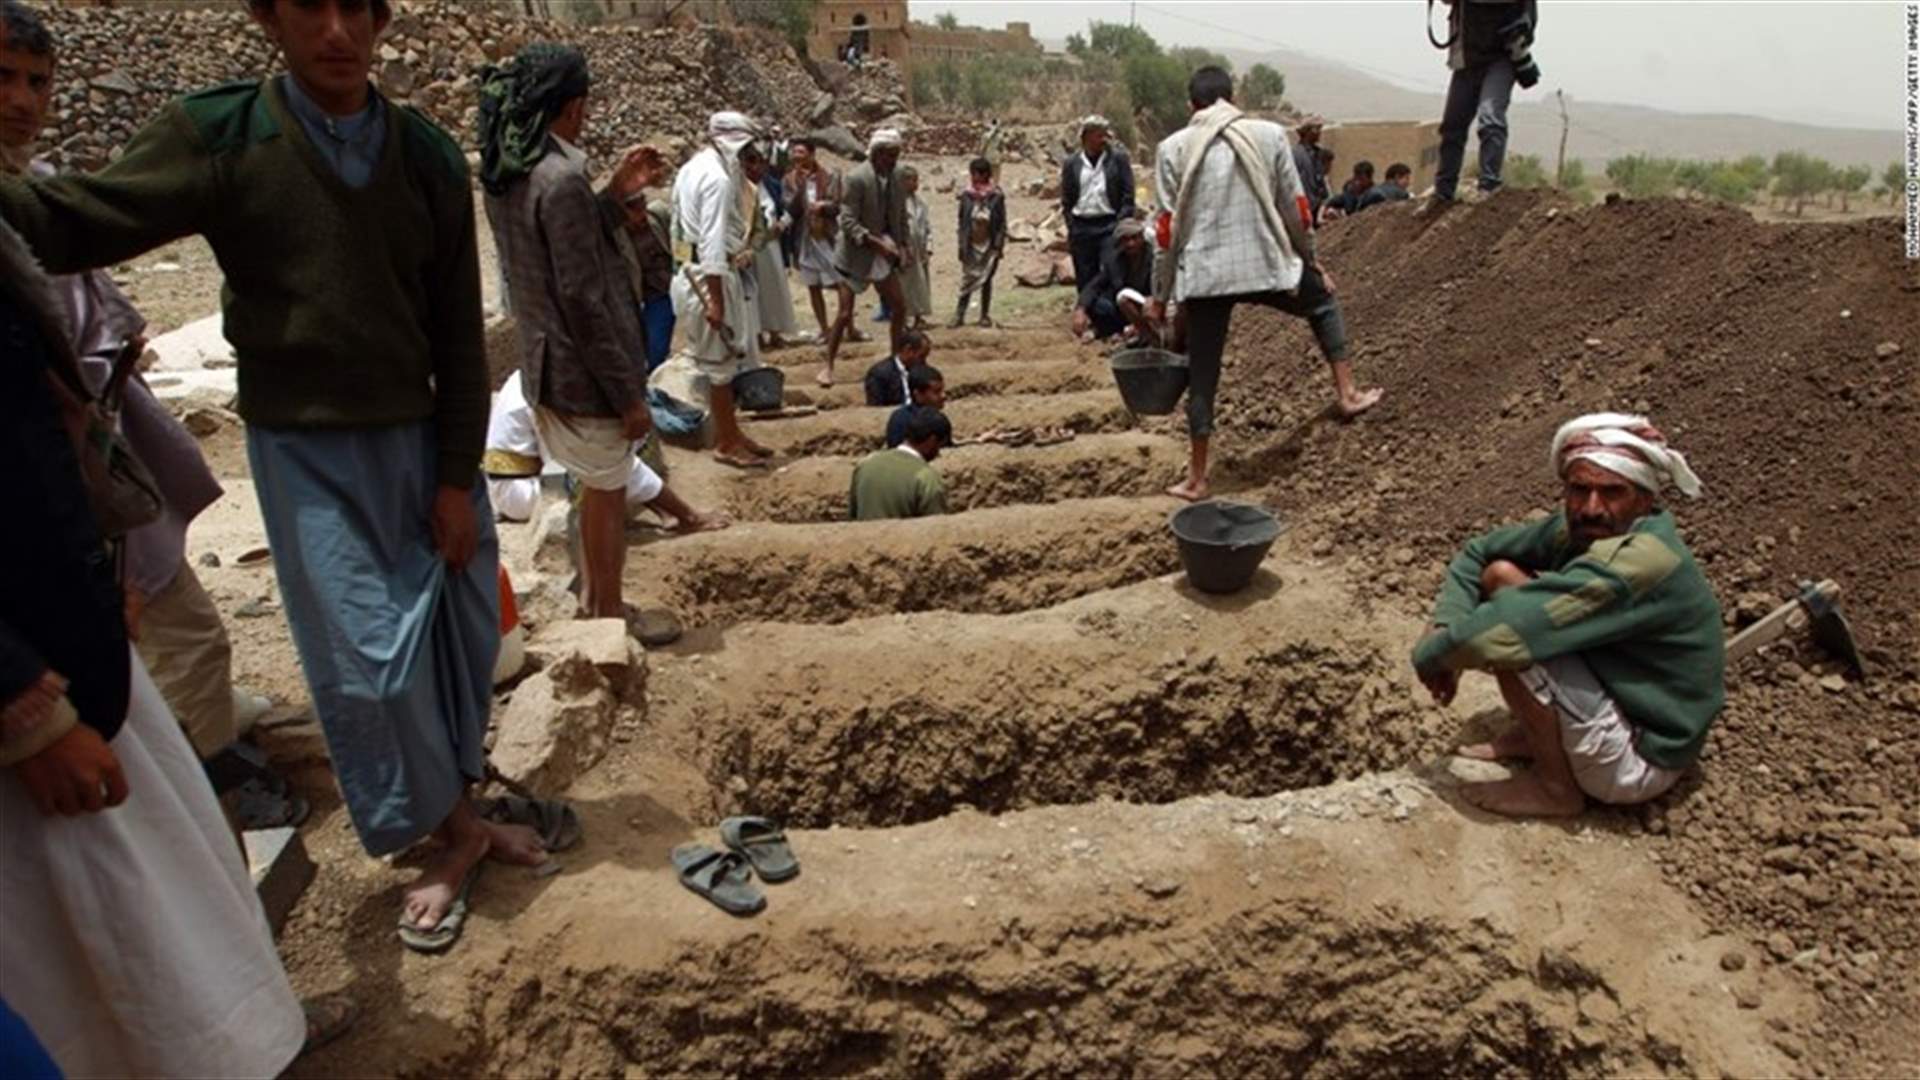 UN says 10,000 killed in Yemen war, nearly twice other estimates